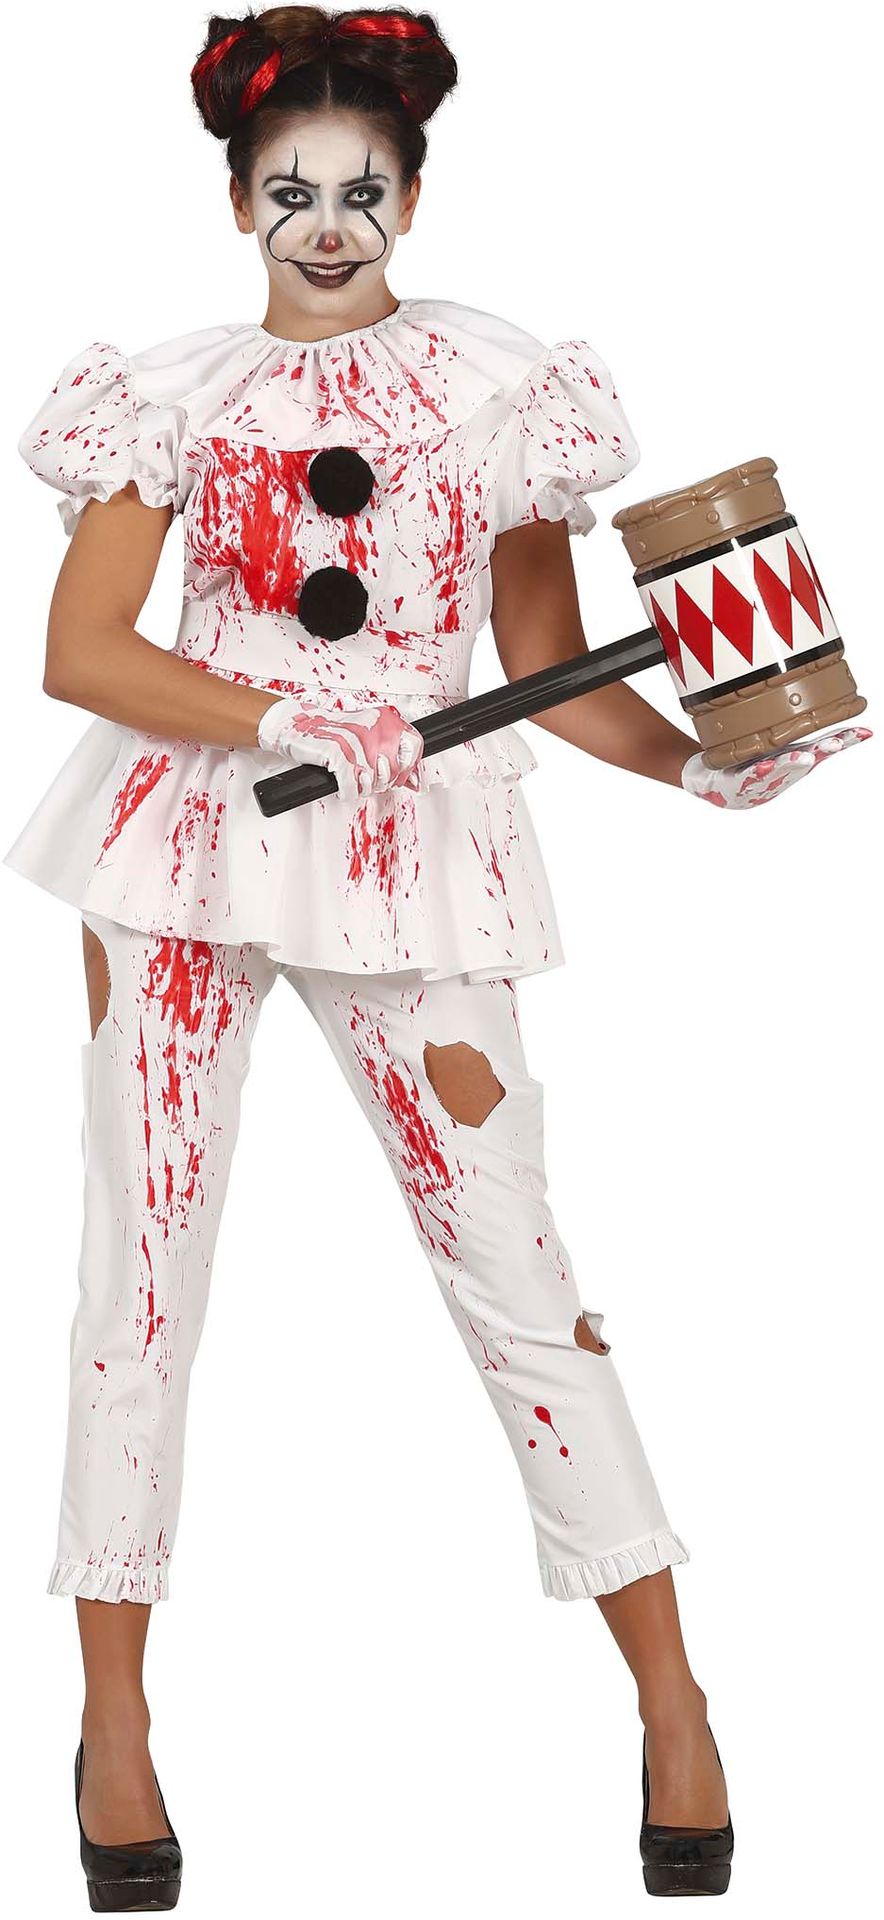 Bloederige killer clown kostuum vrouw